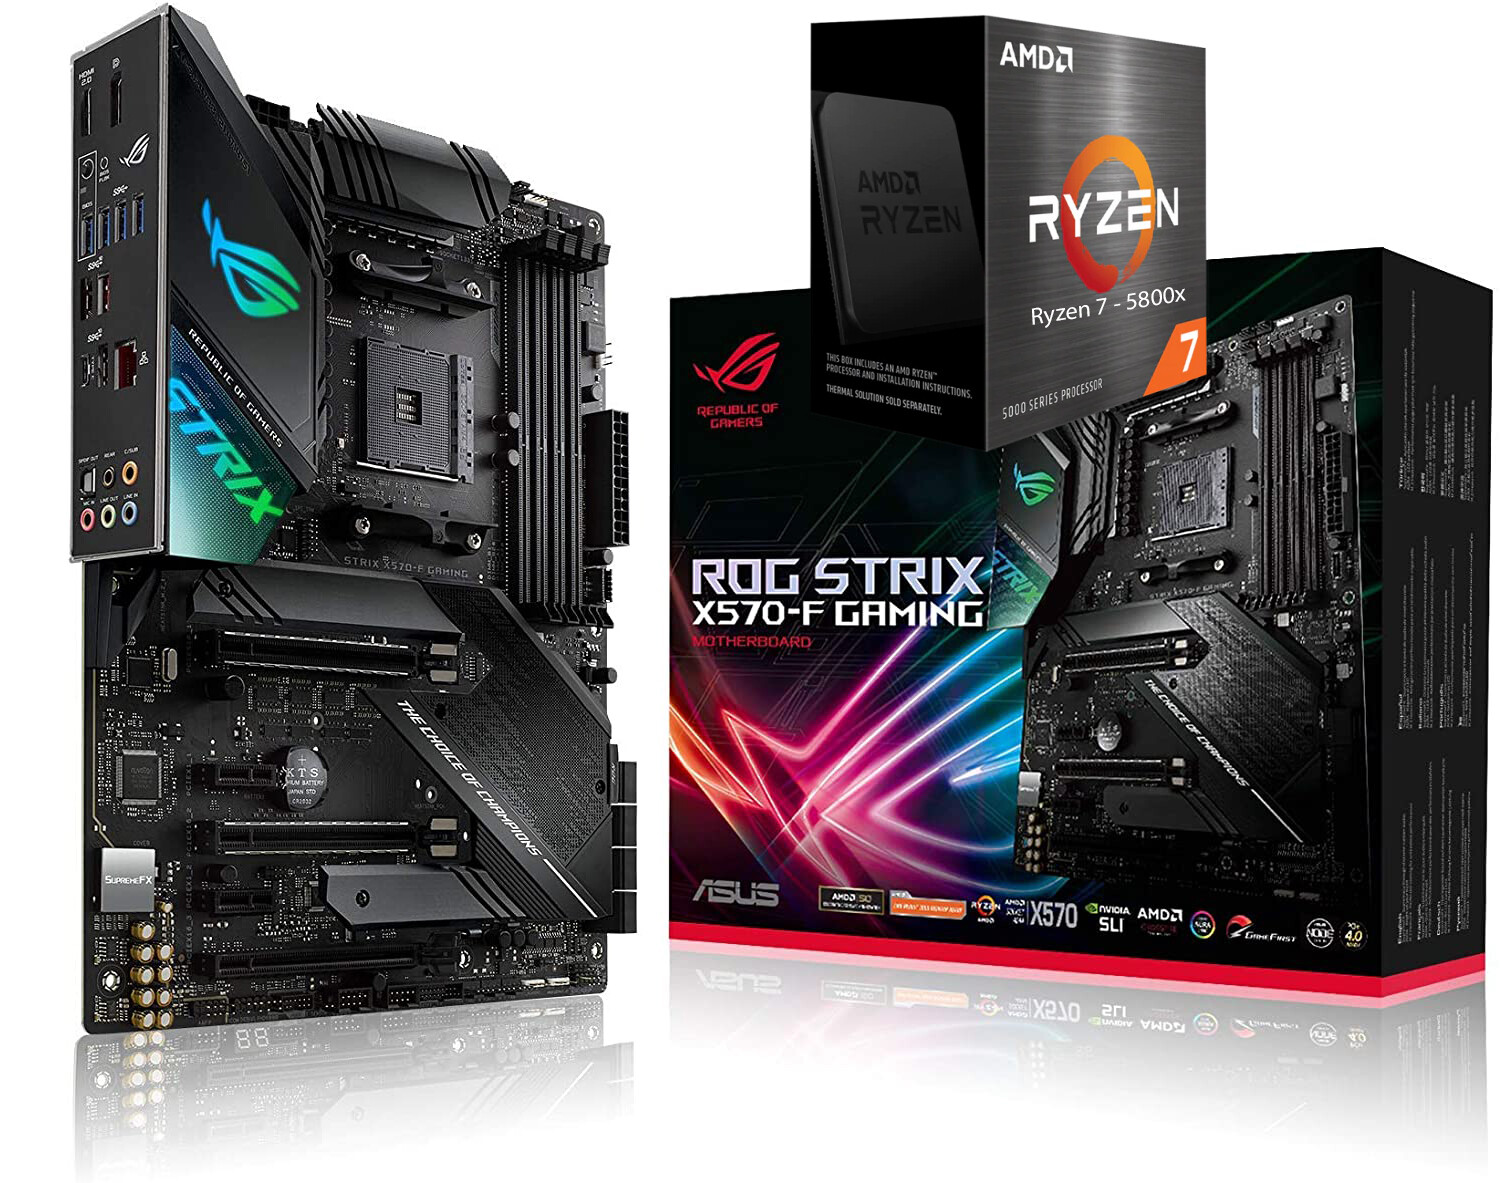 AMD RYZEN 7 5800X 8-Core 3.8 GHz (4.7 GHz Max Boost) + Asus ROG Strix X570-F Gaming Motherboard Bundle